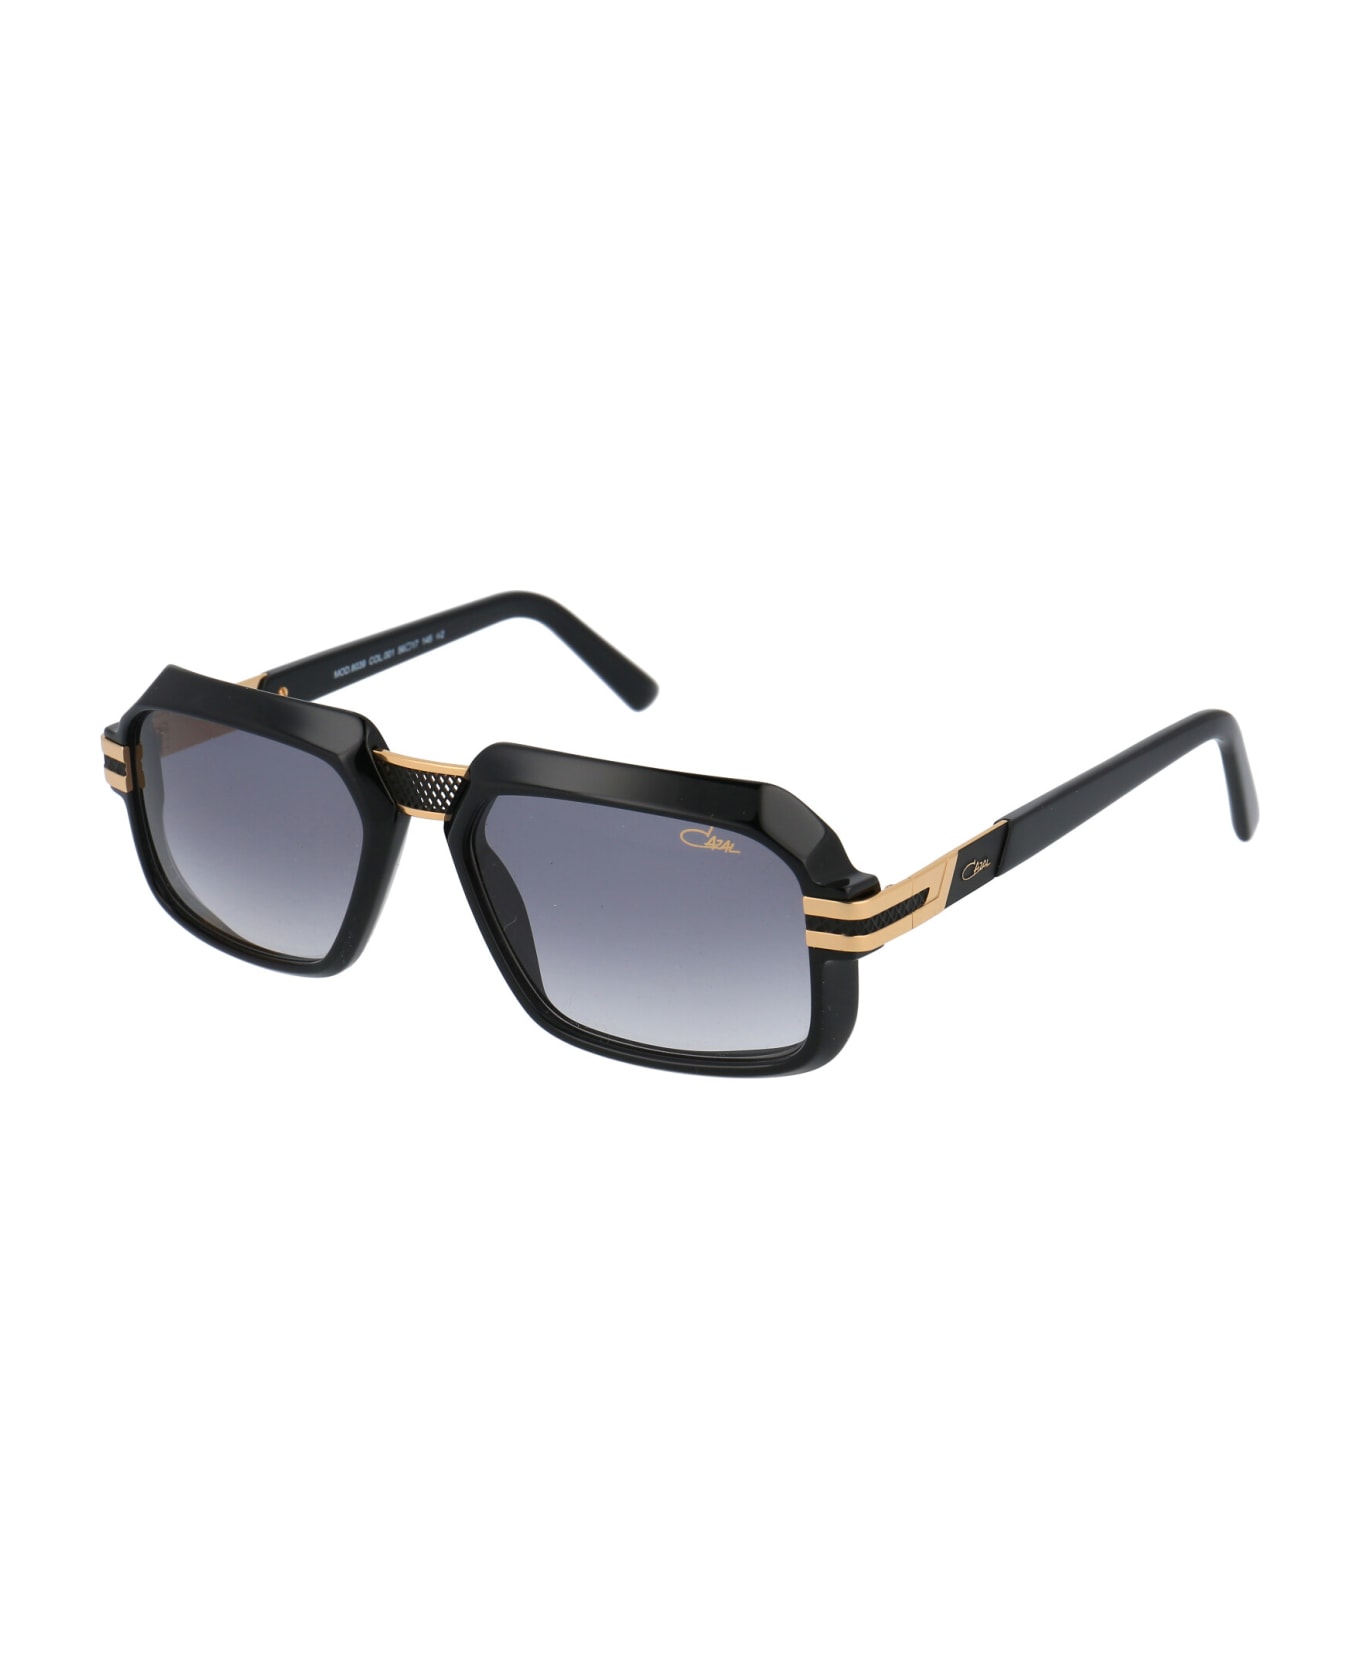 Cazal Mod. 8039 Sunglasses - BLACK